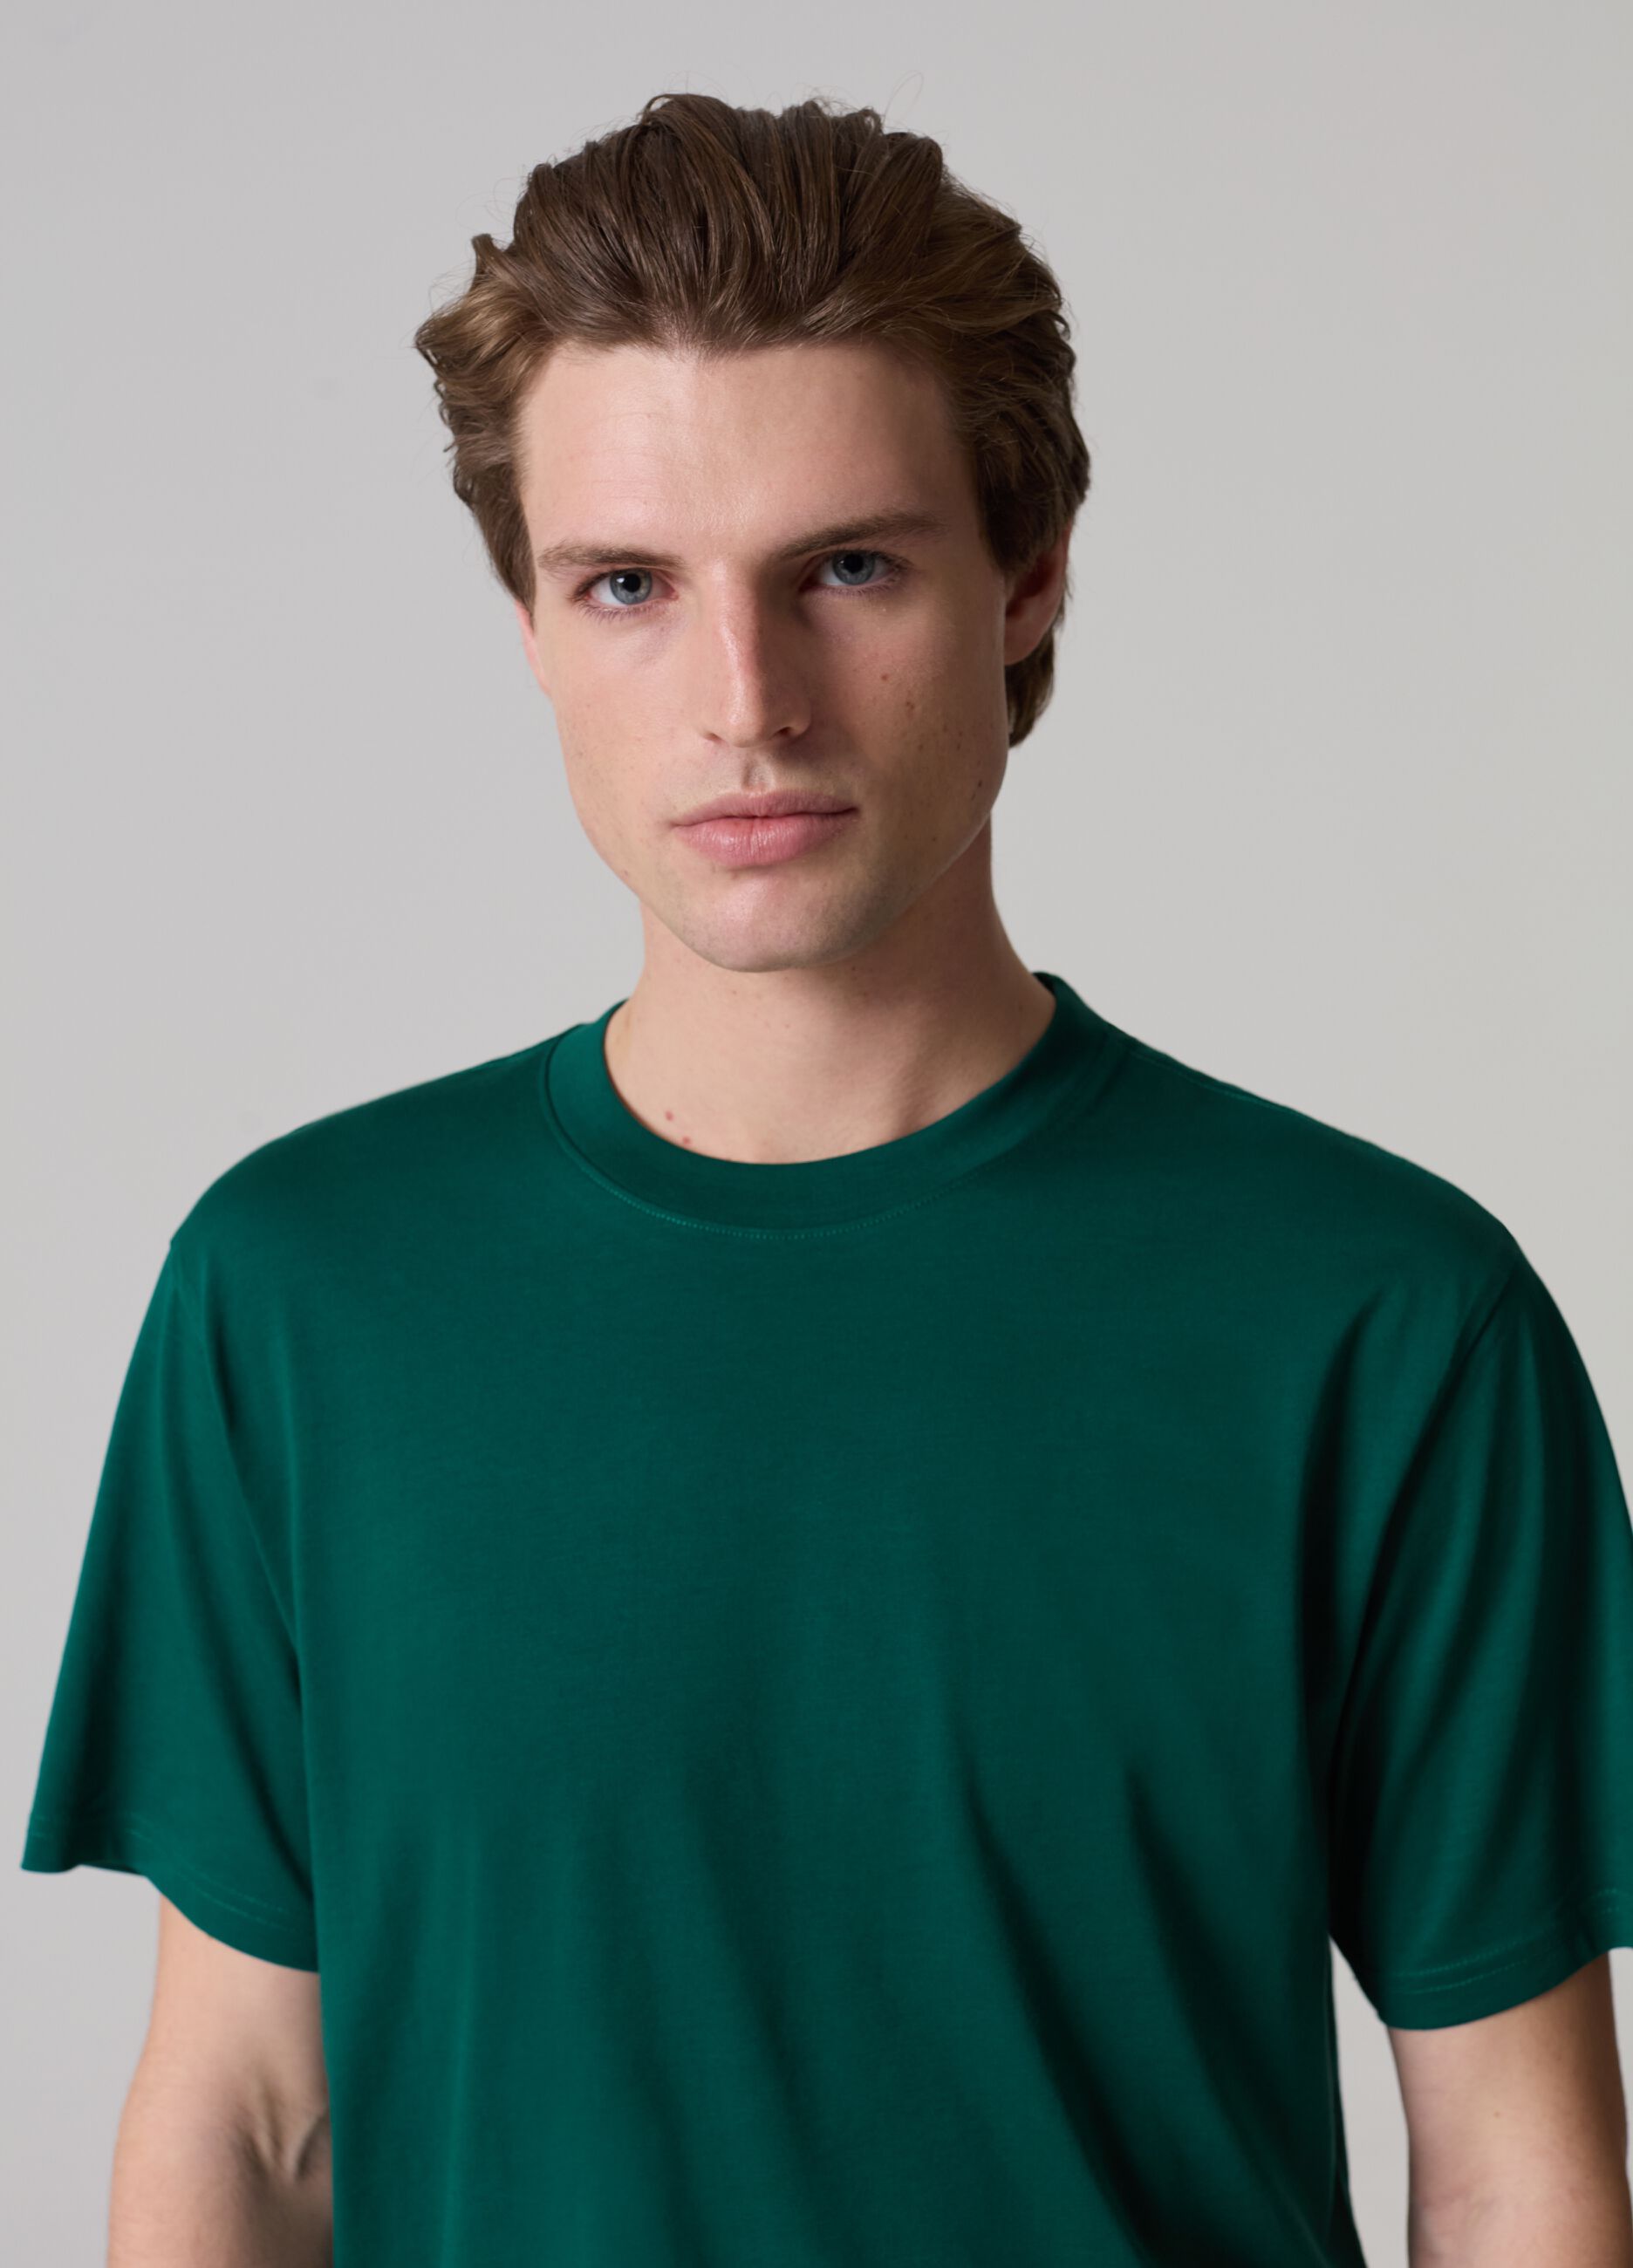 Supima cotton T-shirt with round neck